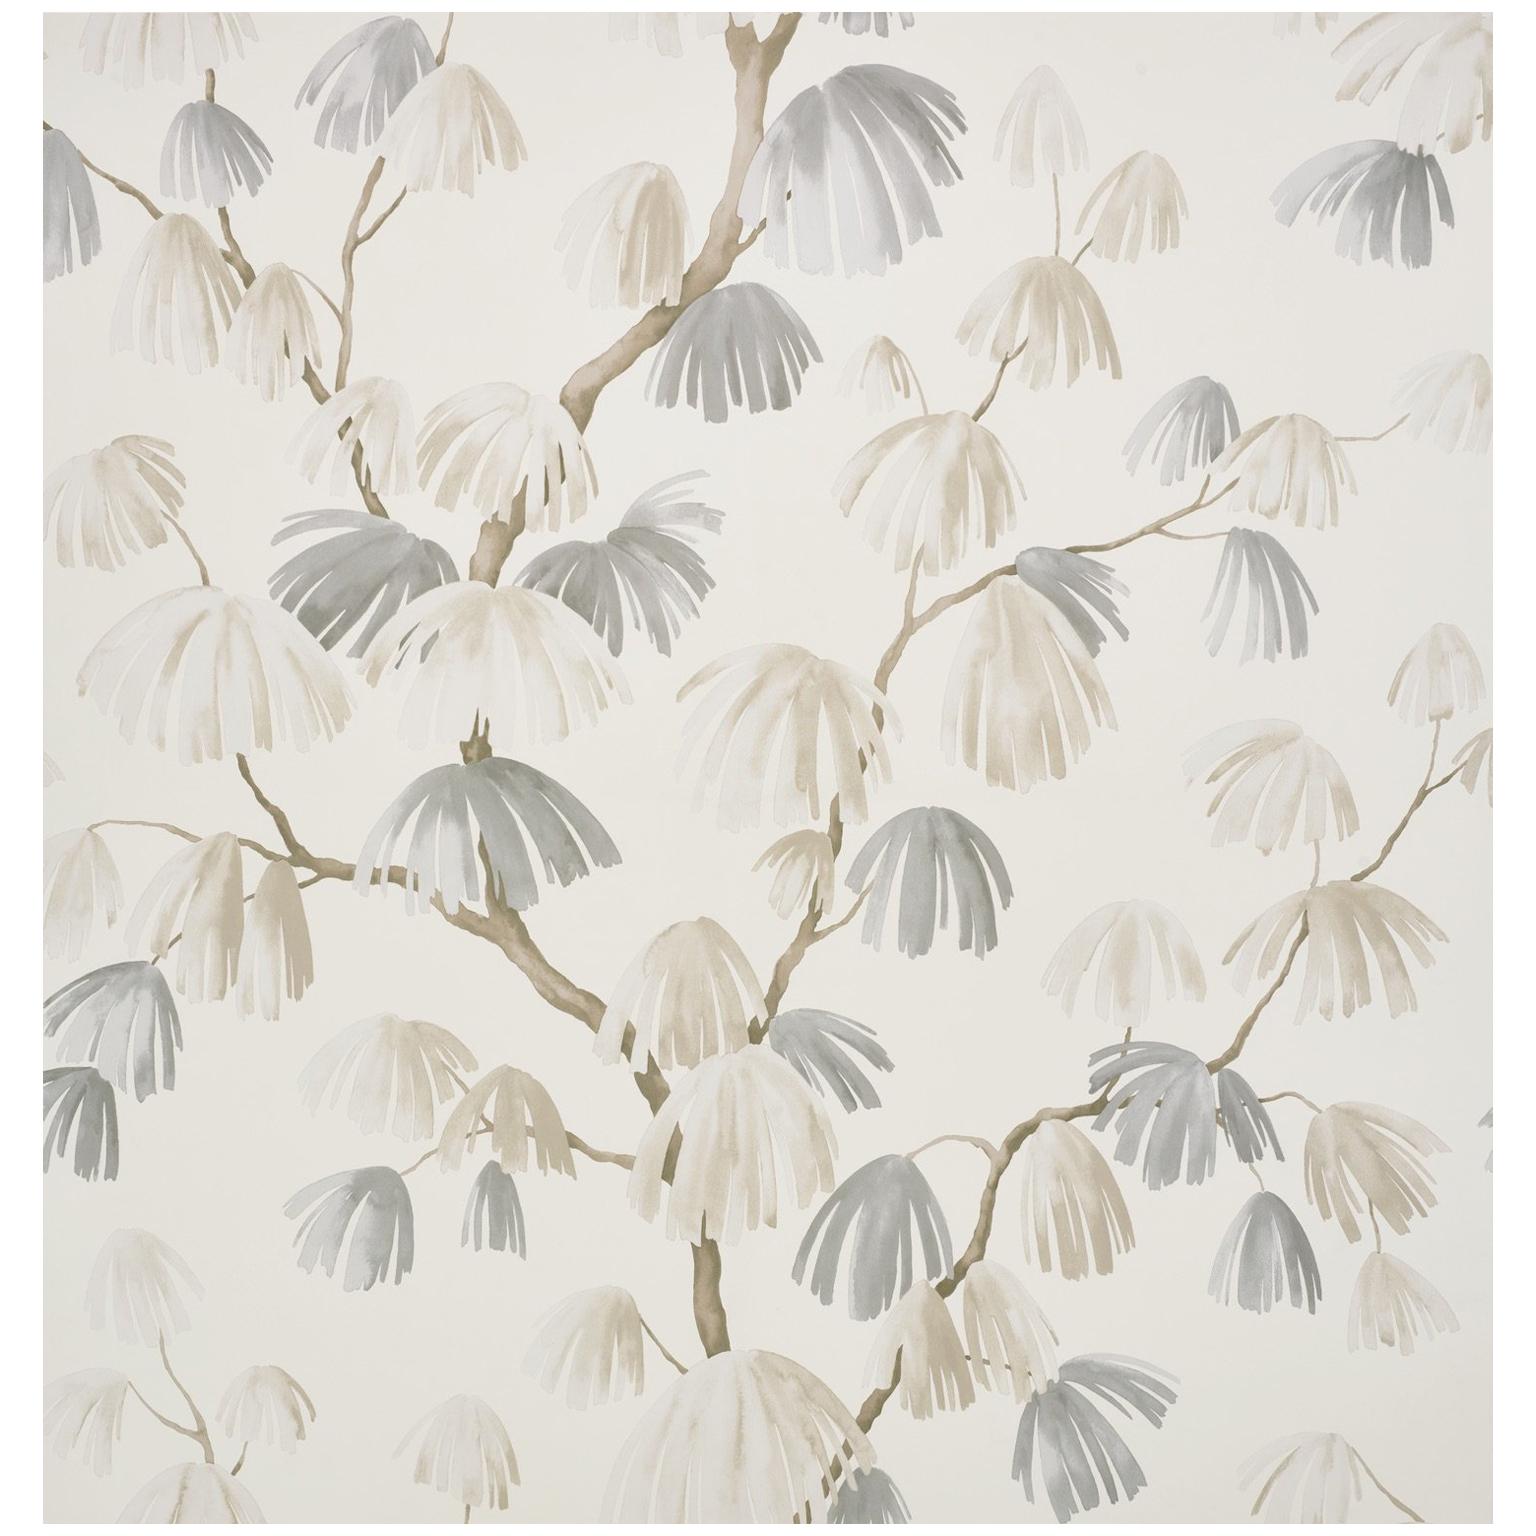 Schumacher David Kaihoi Weeping Pine Botanical Neutral Wallpaper, 9 Yard Roll